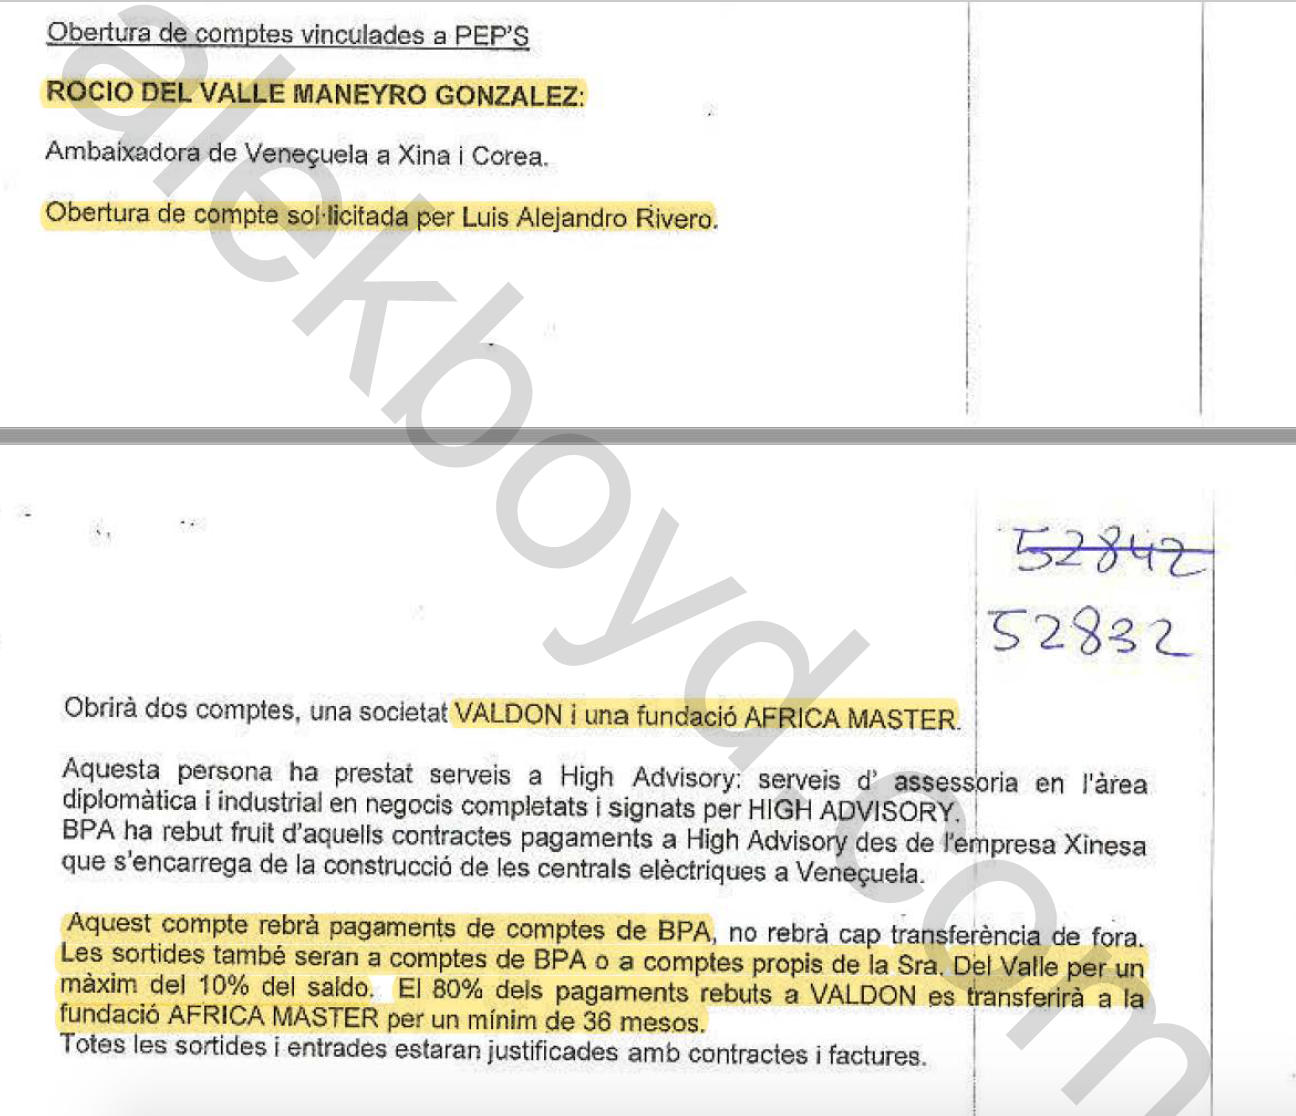 Rocio Maneiro, Venezuelan Ambassador to UK, bribe payment contract.